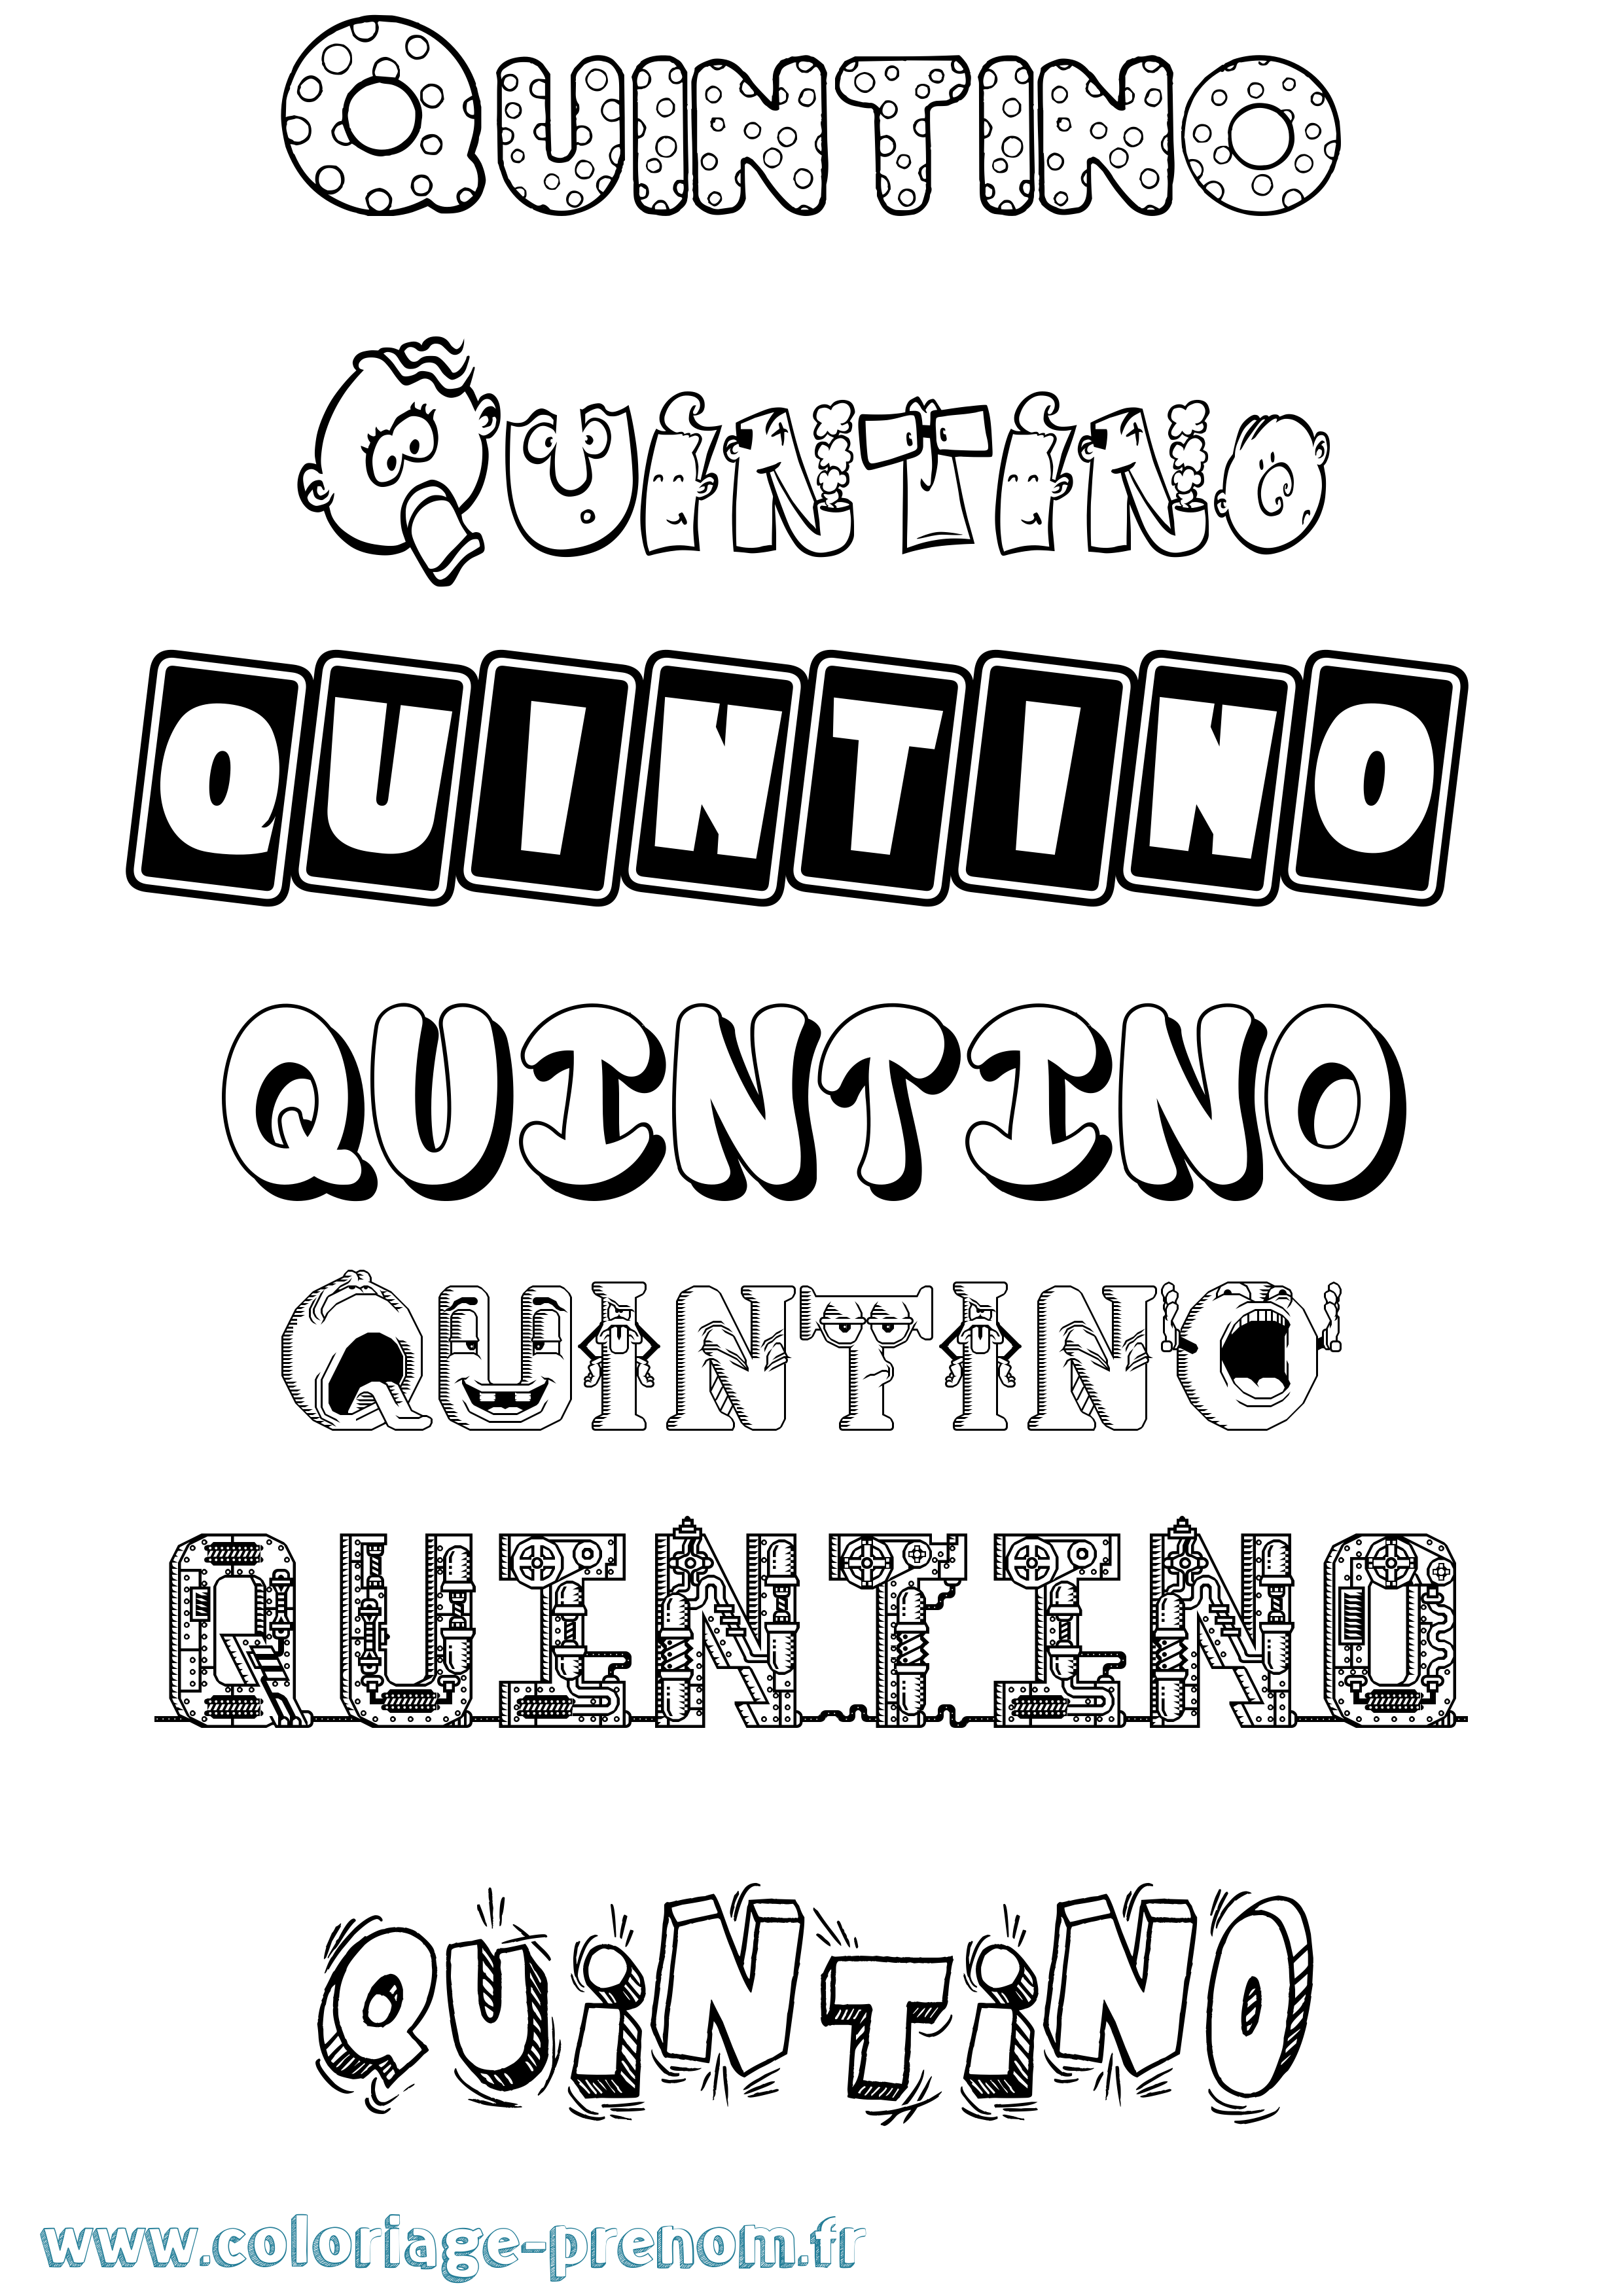 Coloriage prénom Quintino Fun